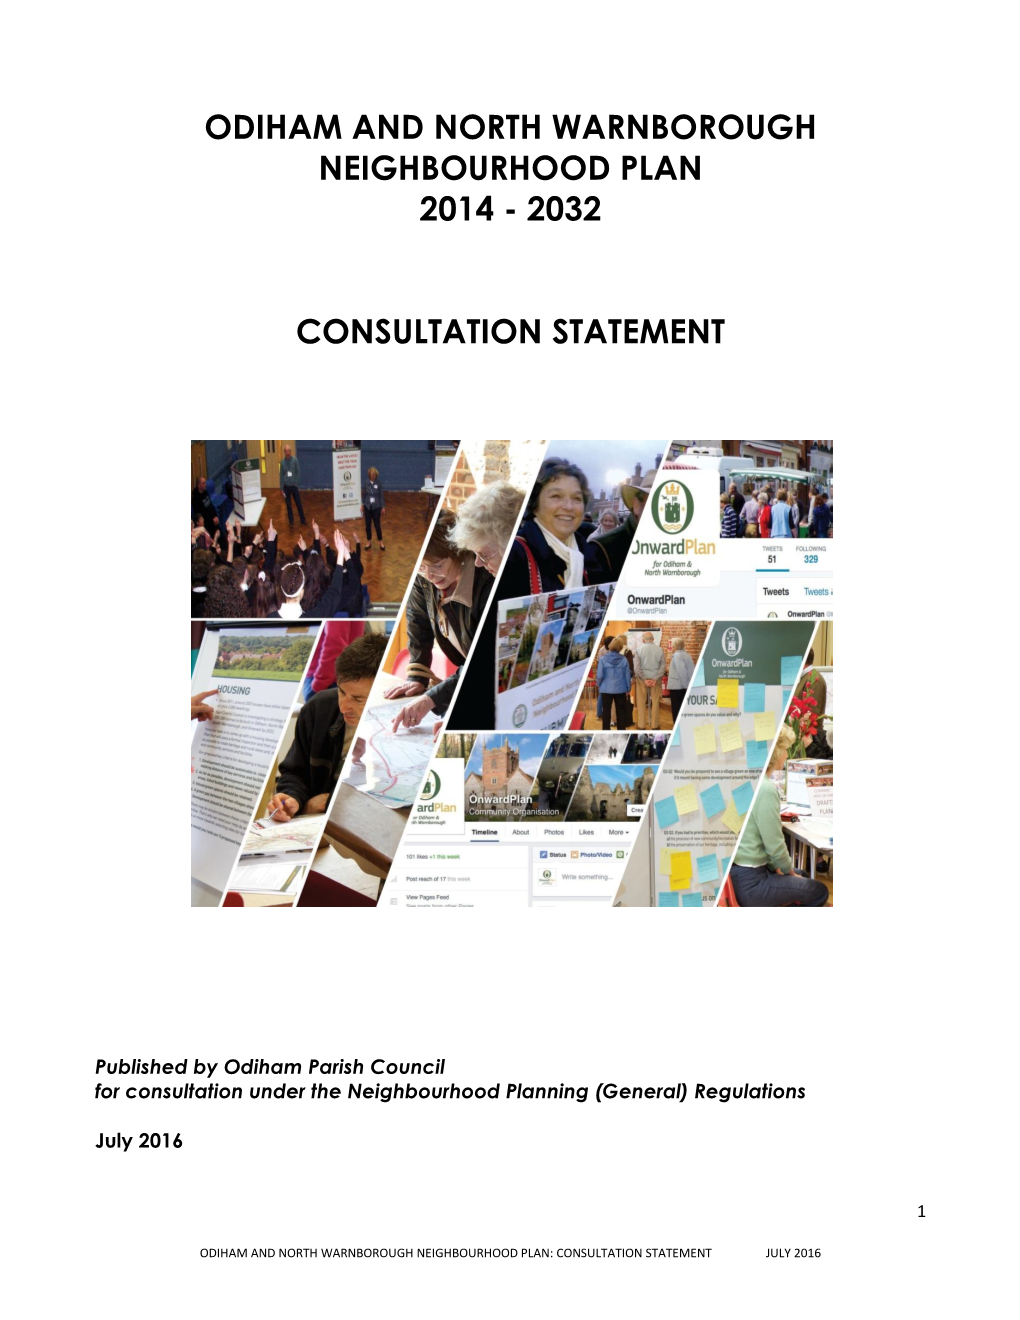 Odiham and North Warnborough Neighbourhood Plan 2014 - 2032